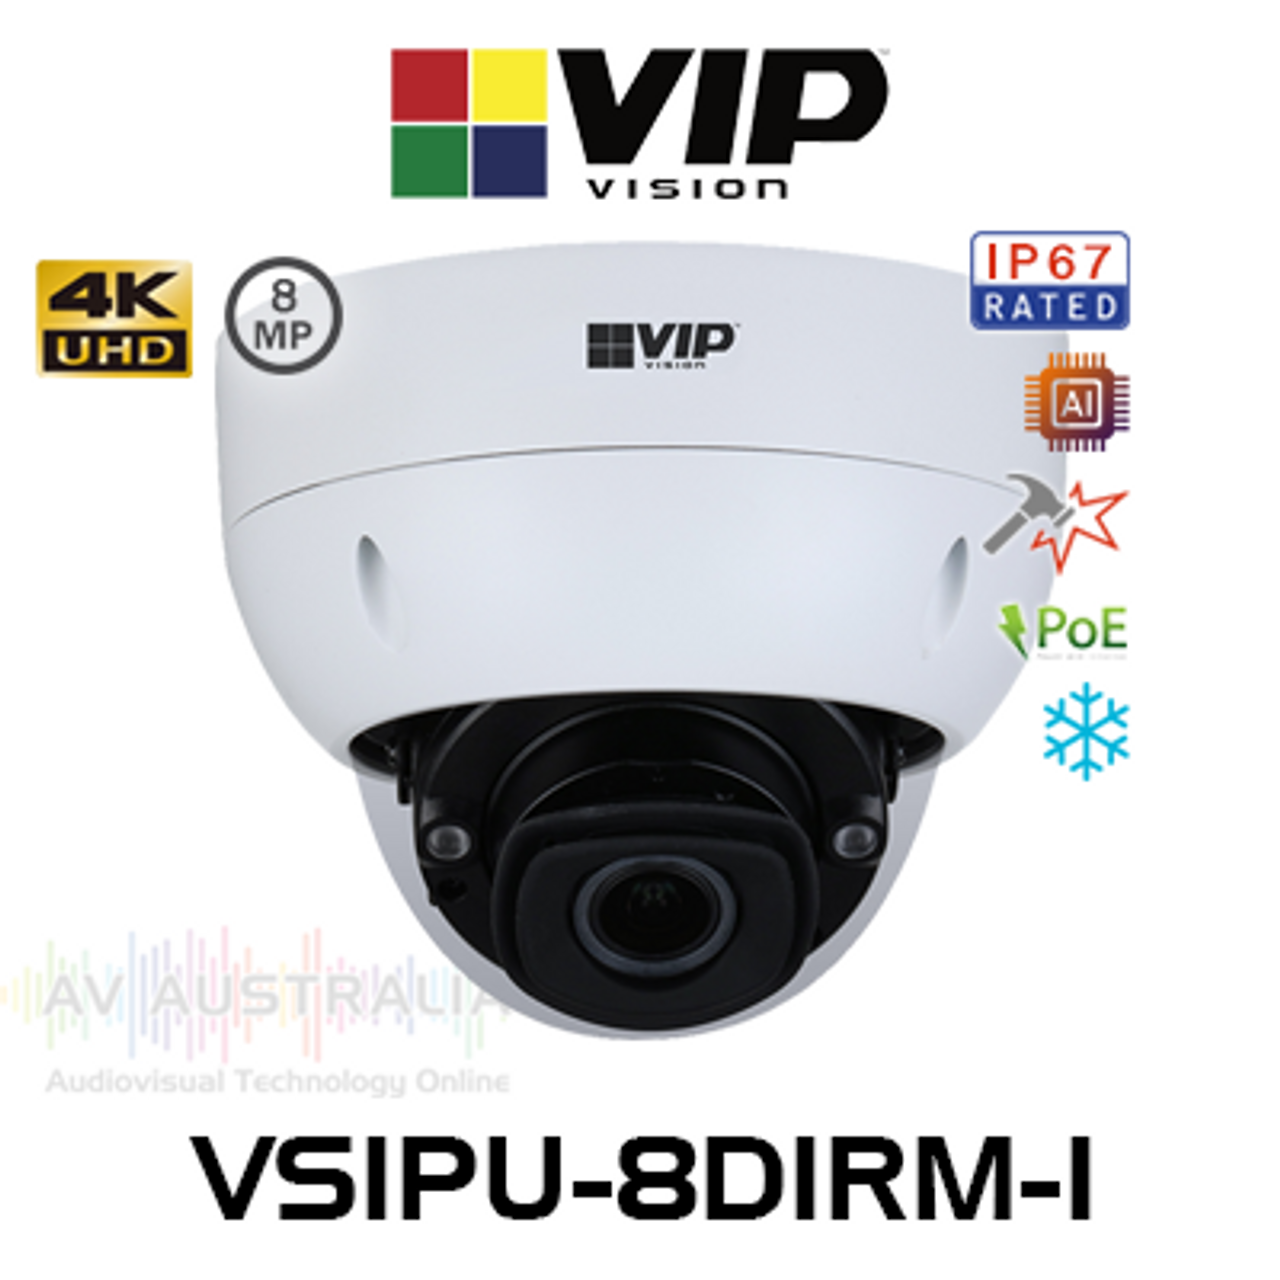 VIP Vision Ultimate AI 4K 8MP 2.7-12mm Varifocal IP67 Vandal PoE Dome IP Camera